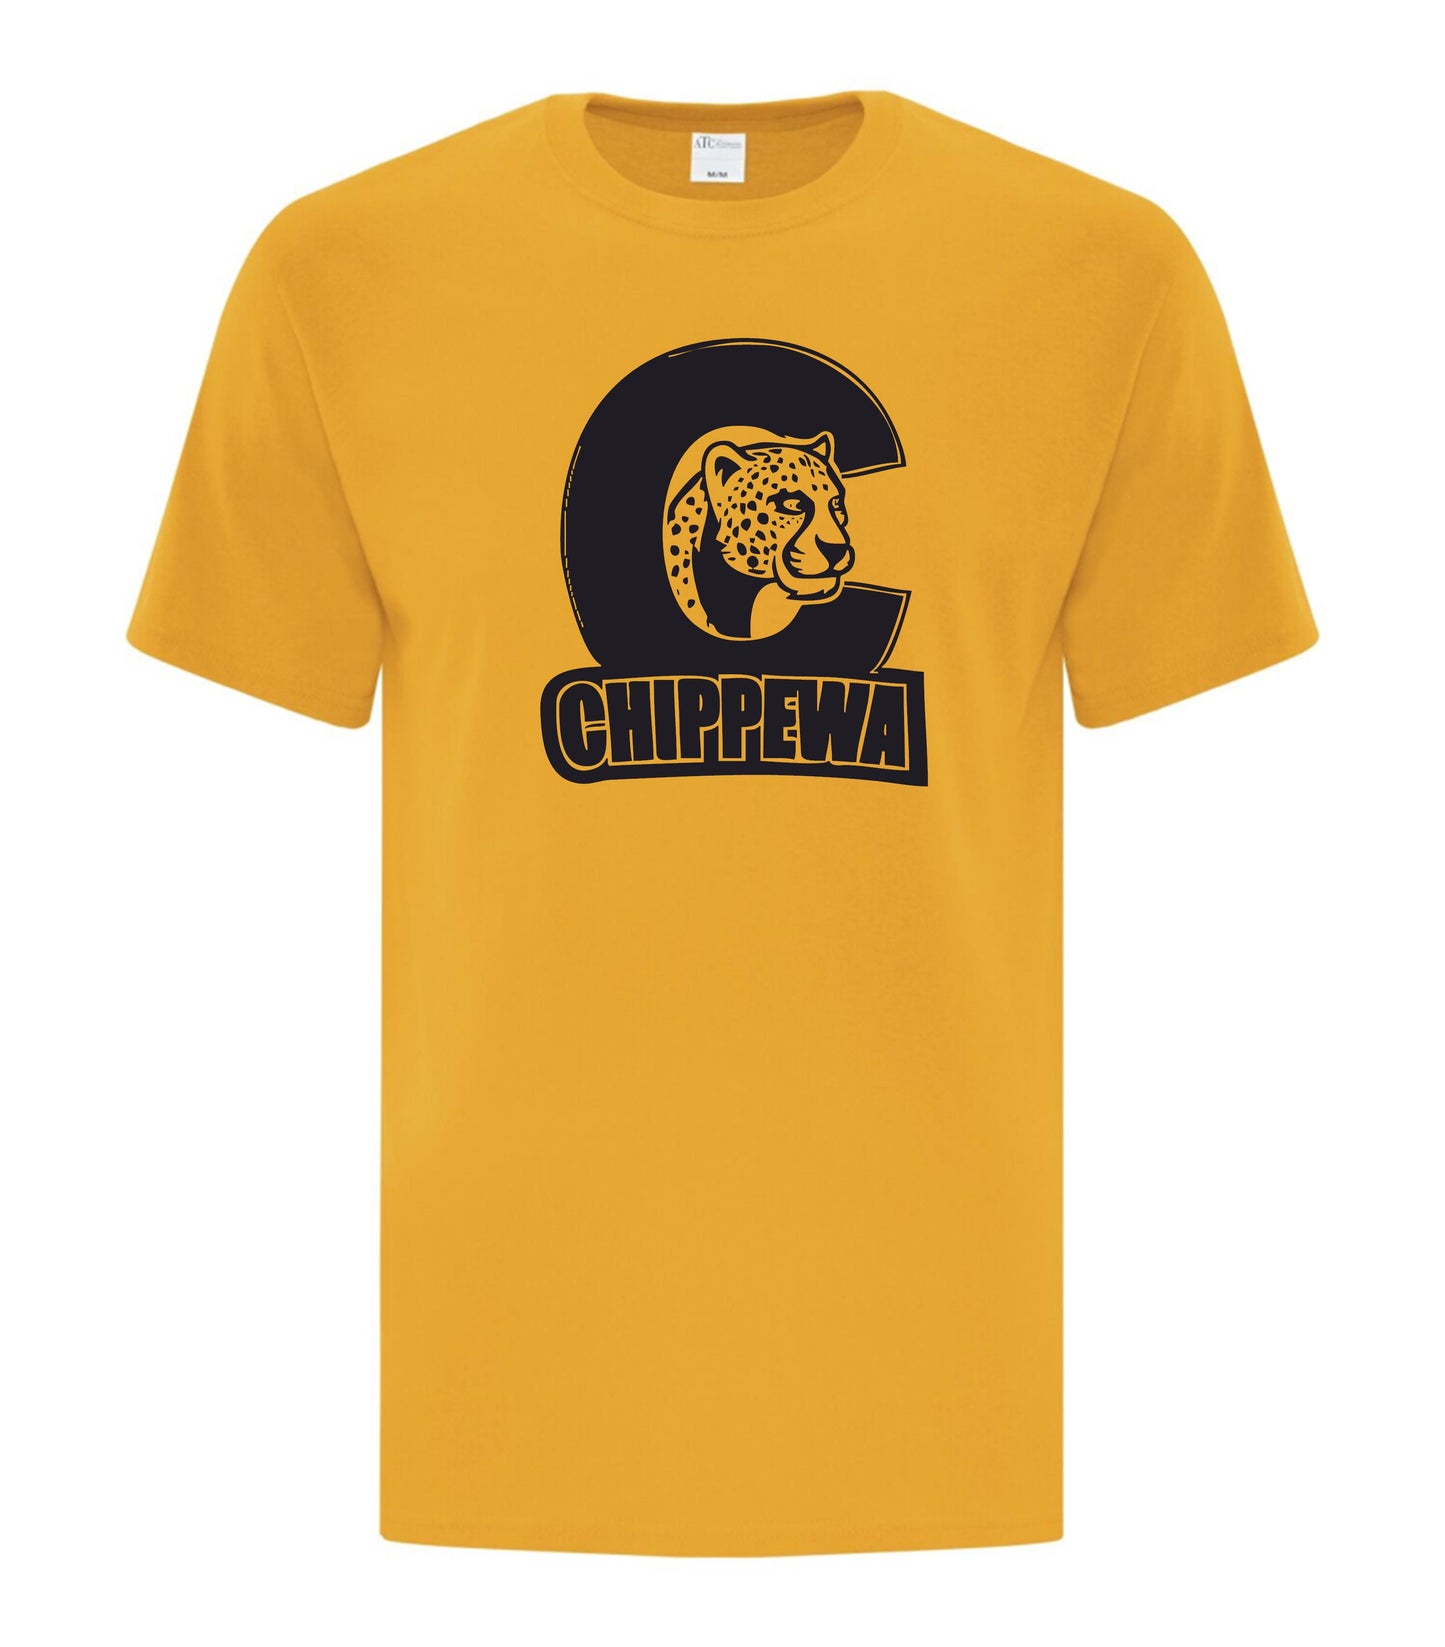 Chippewa Public School Adult Colour House T-Shirt